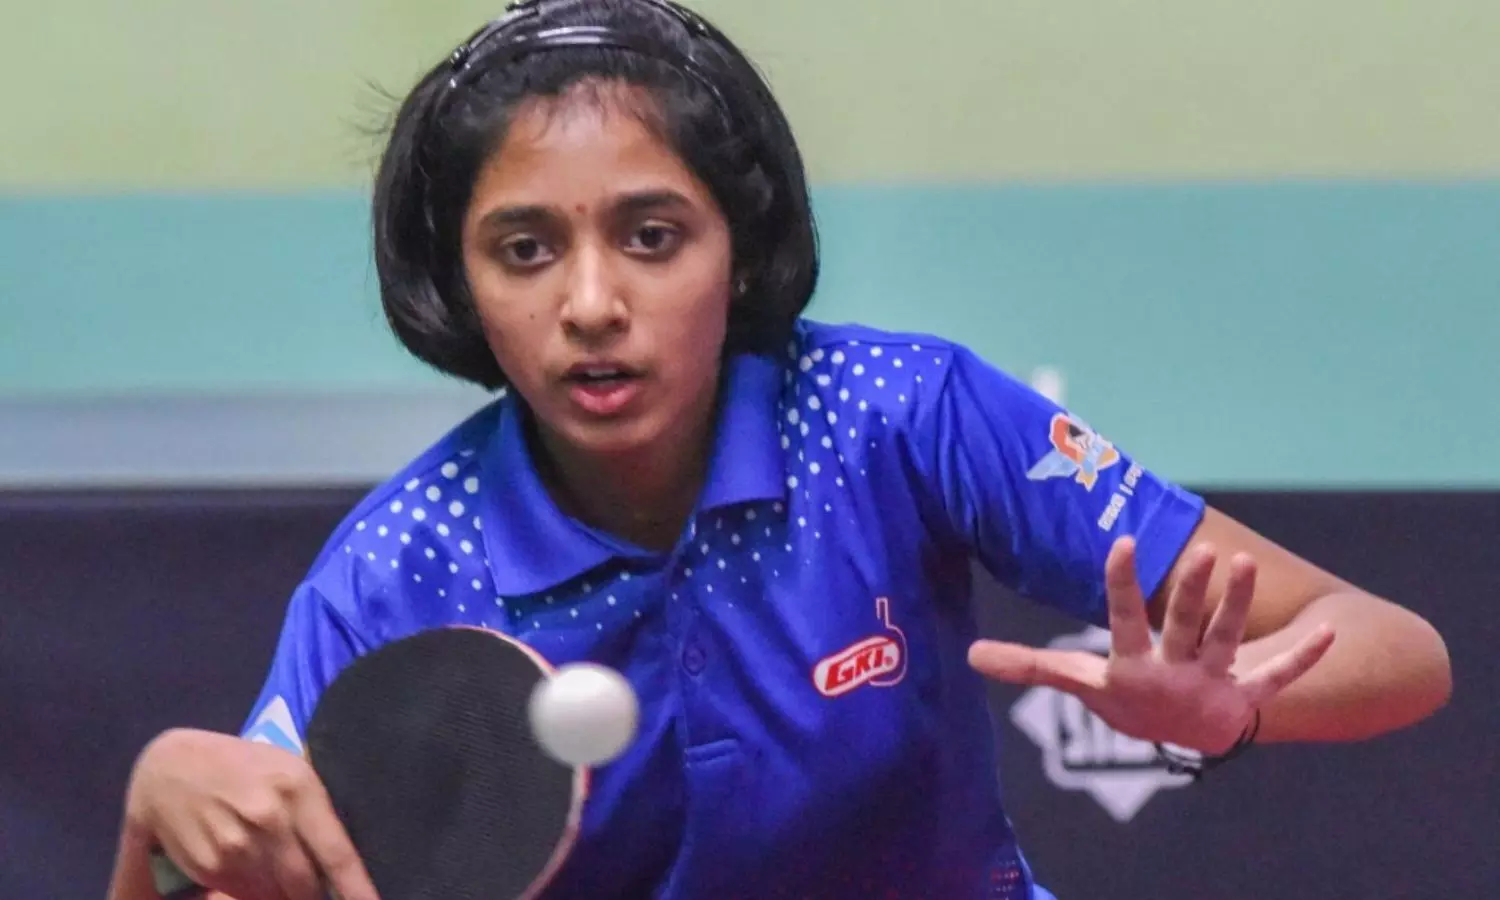 Yashaswini Gorpade wins U-19 girls singles bronze medal at Asian Junior and Cadet Table Tennis